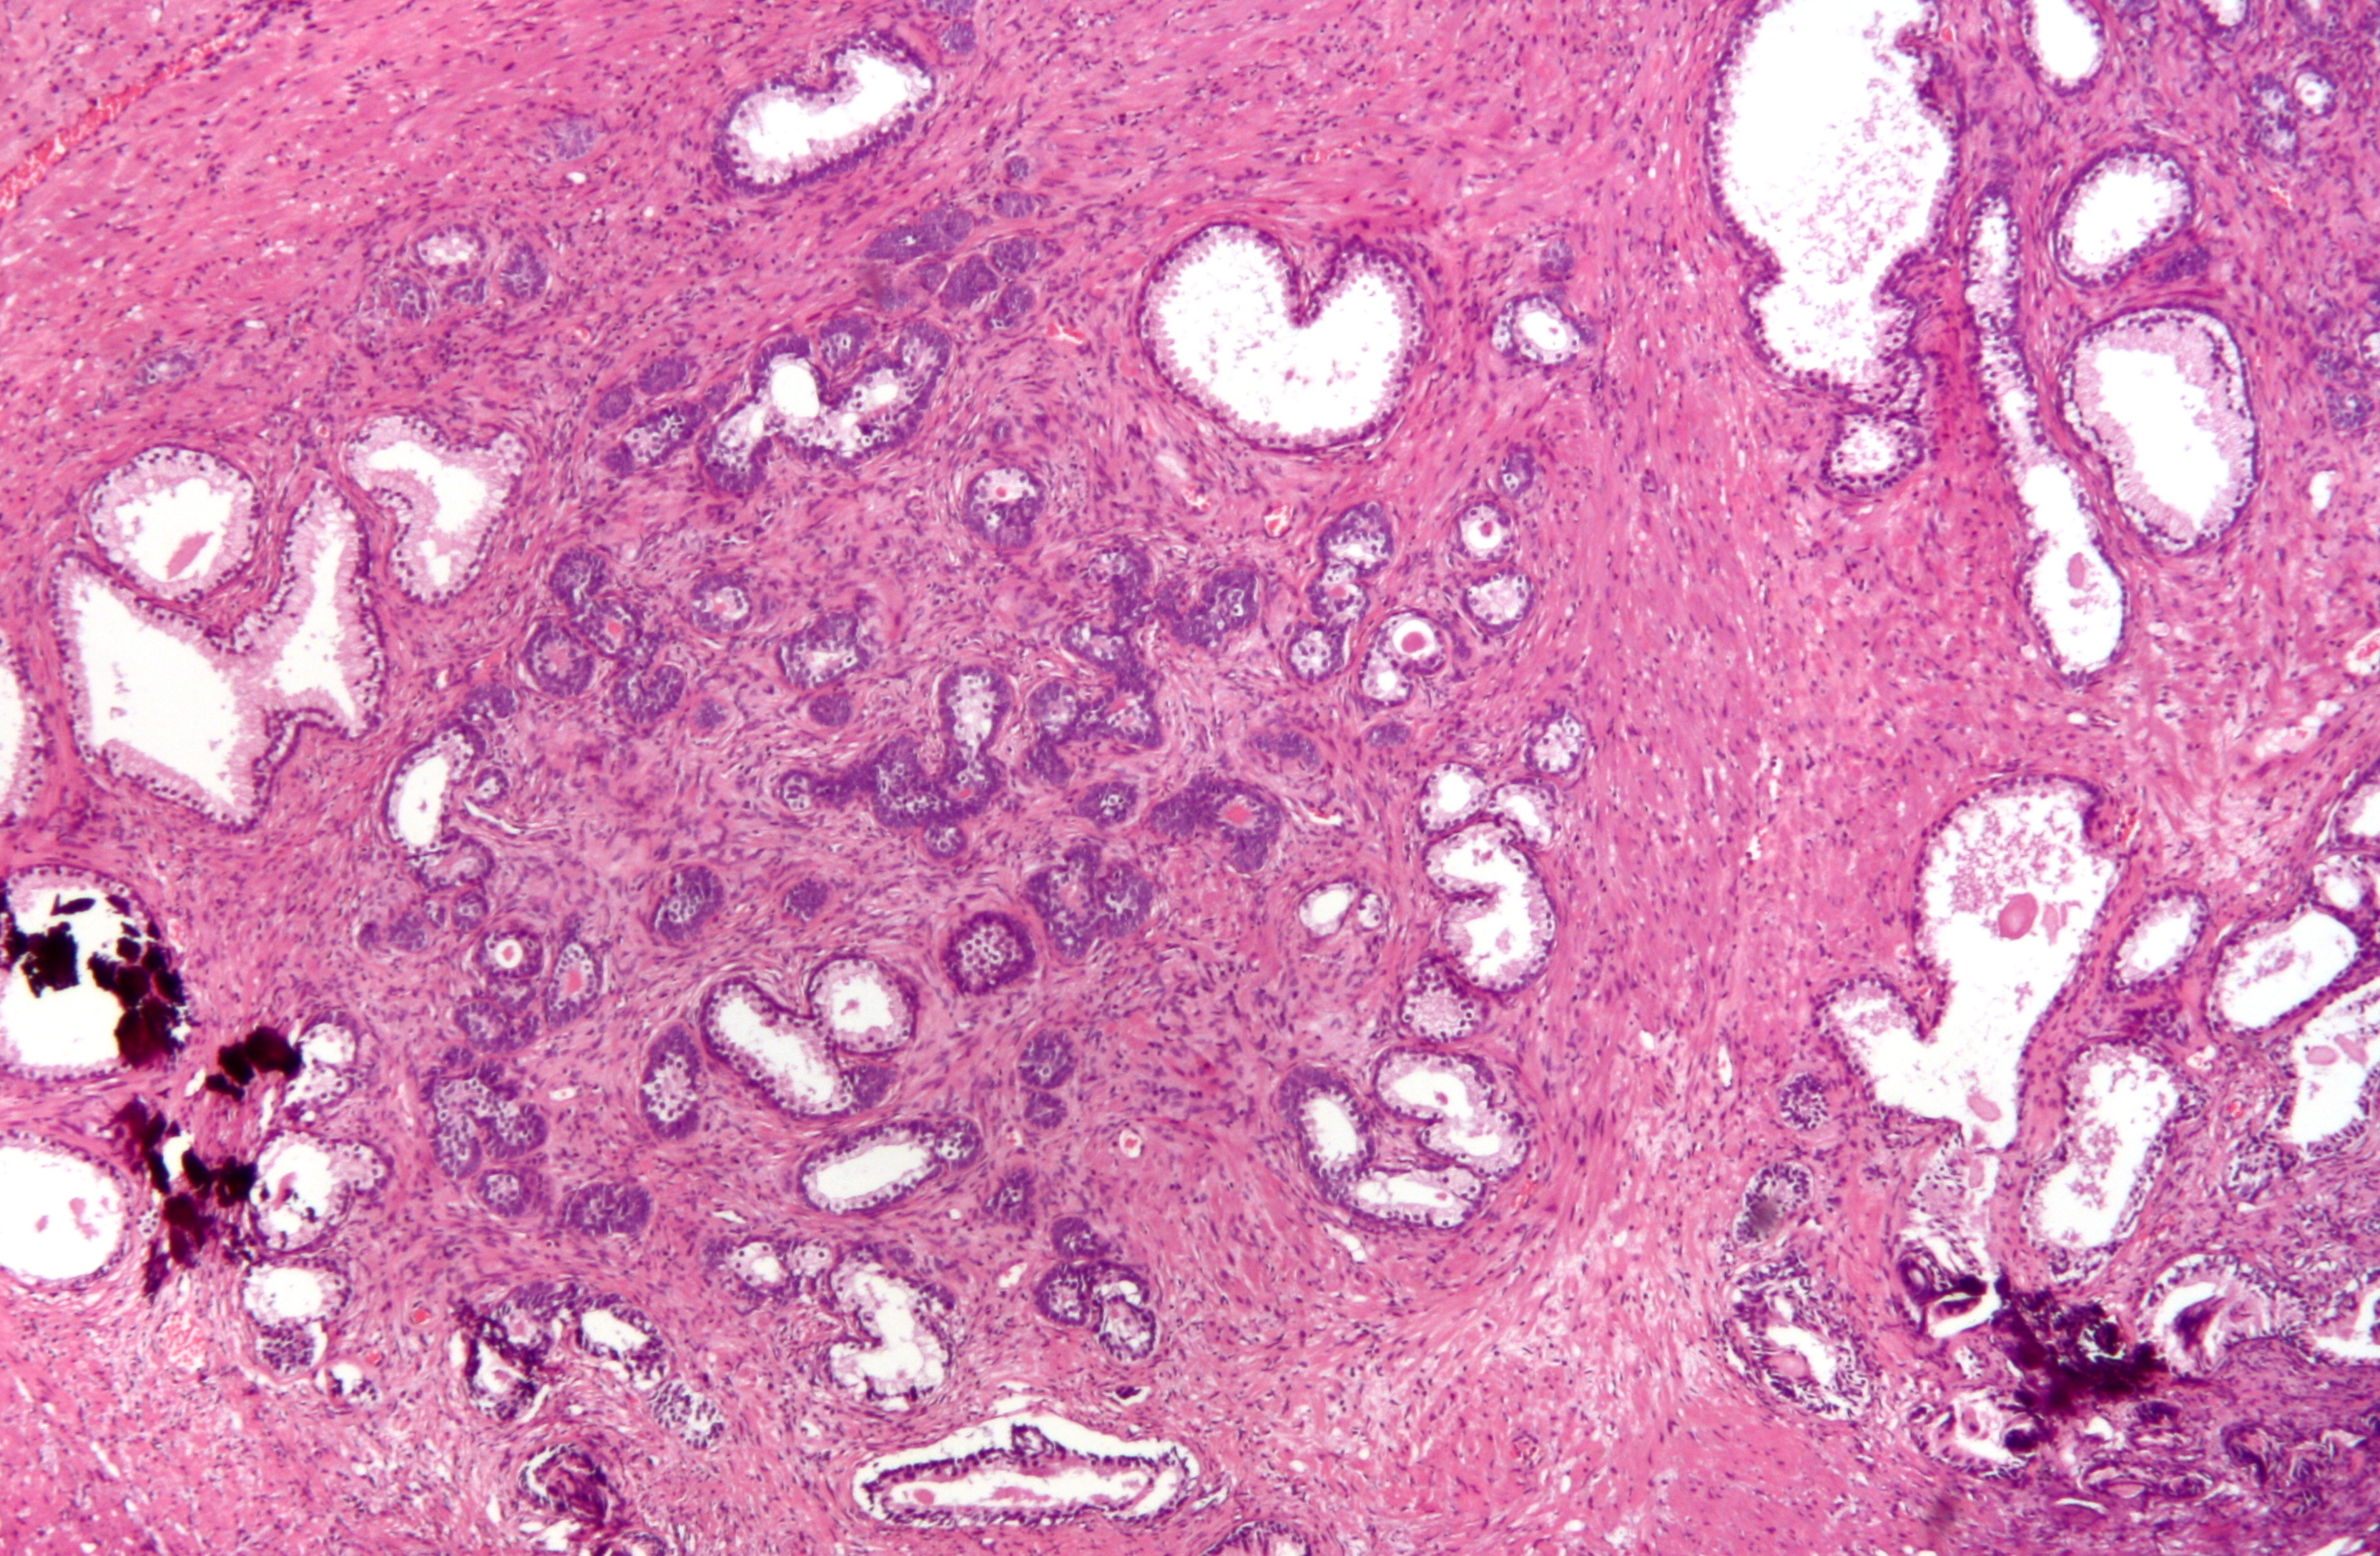 Papillary urothelial hyperplasia pathology - Urinary bladder papilloma histology.